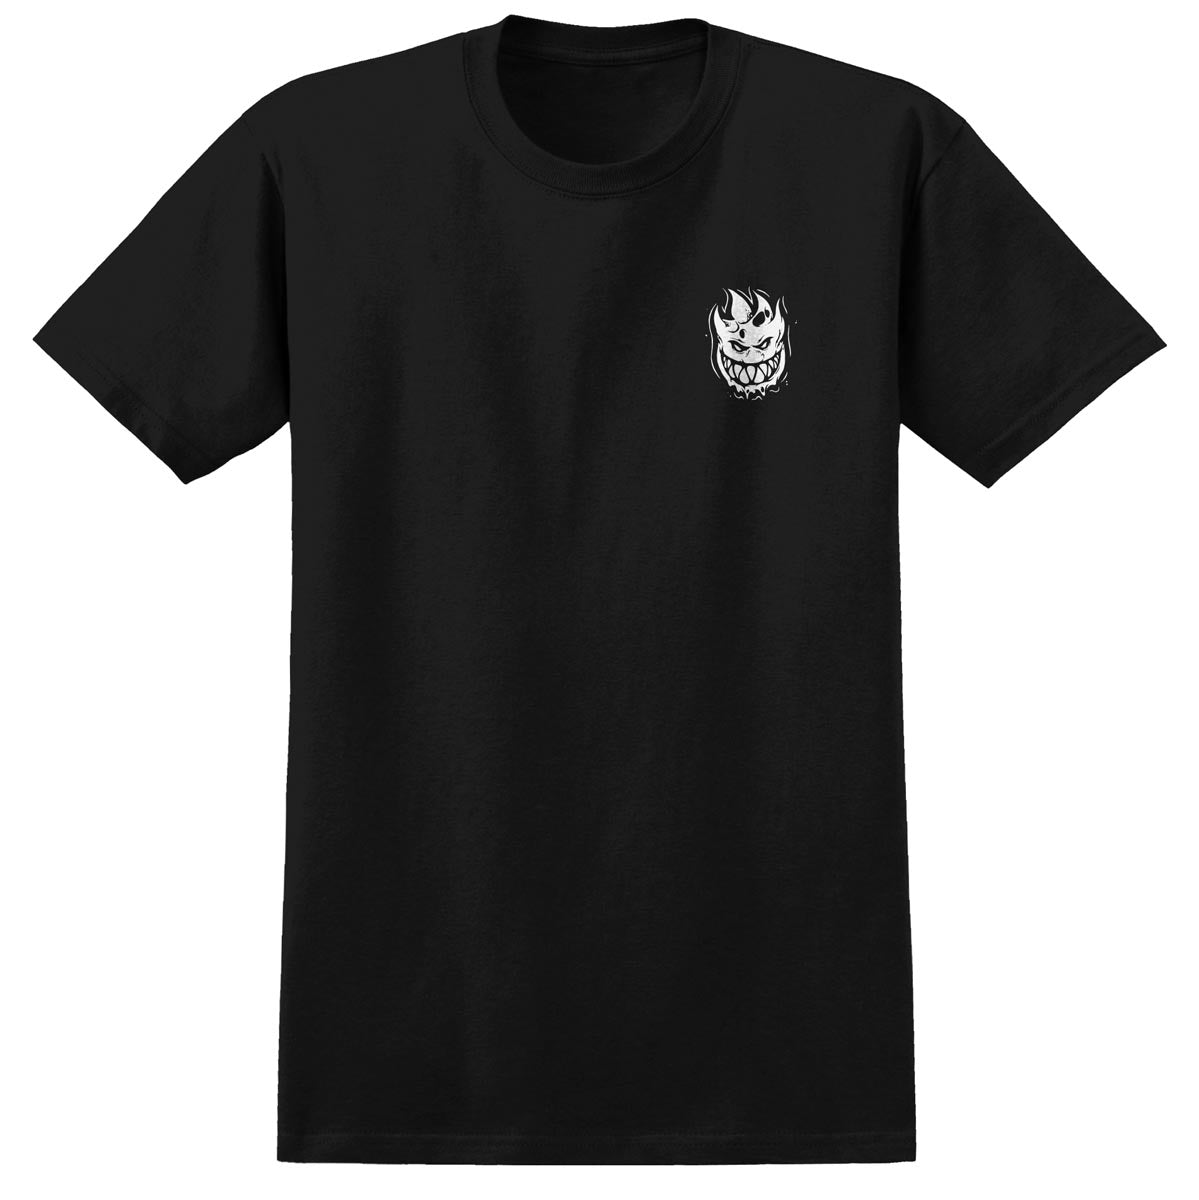 Spitfire Decay Classic Swirl T-Shirt - Black image 2